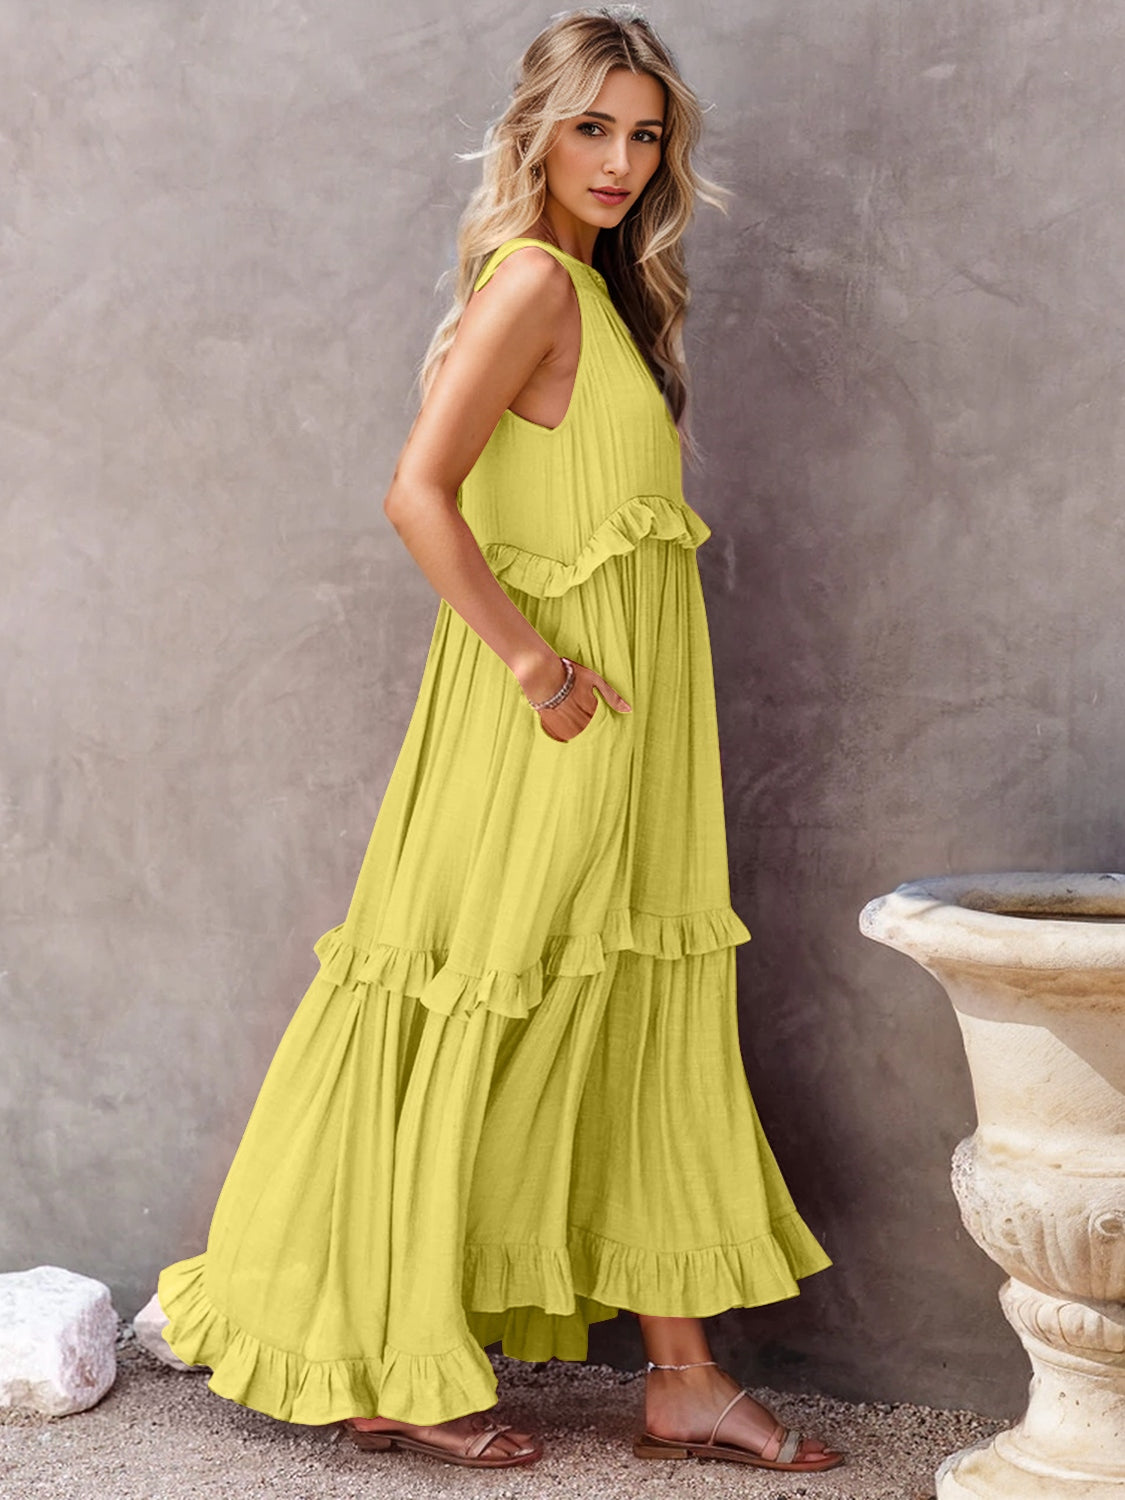 TEEK - Ruffled Sleeveless Tiered Pocketed Dress DRESS TEEK Trend Chartreuse S 